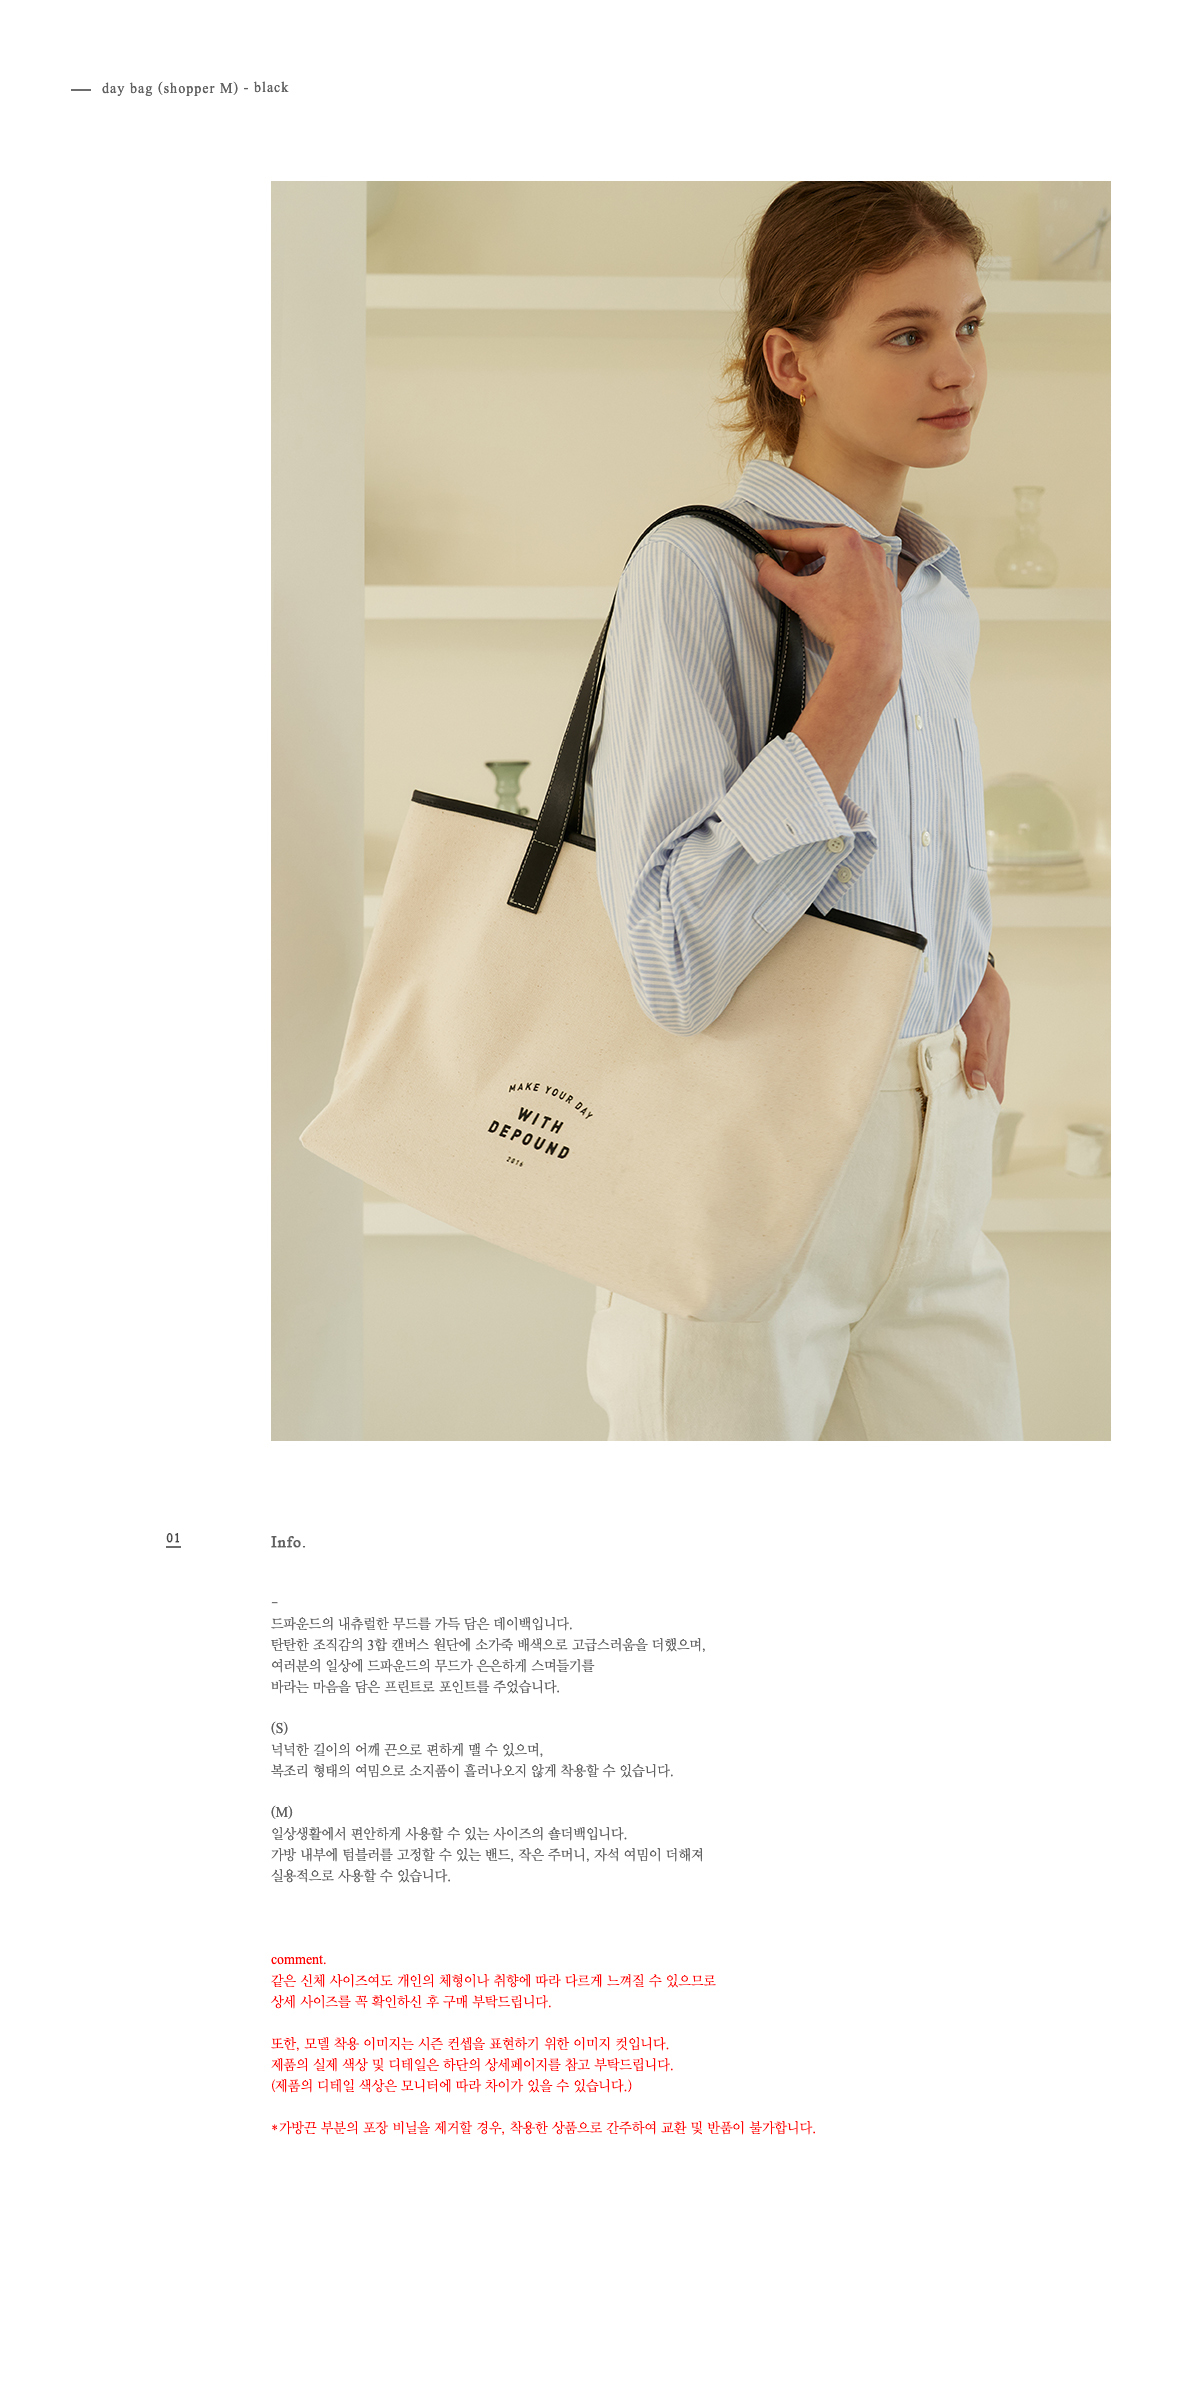 international]day bag (shopper M) - black - DEPOUND CO LTD